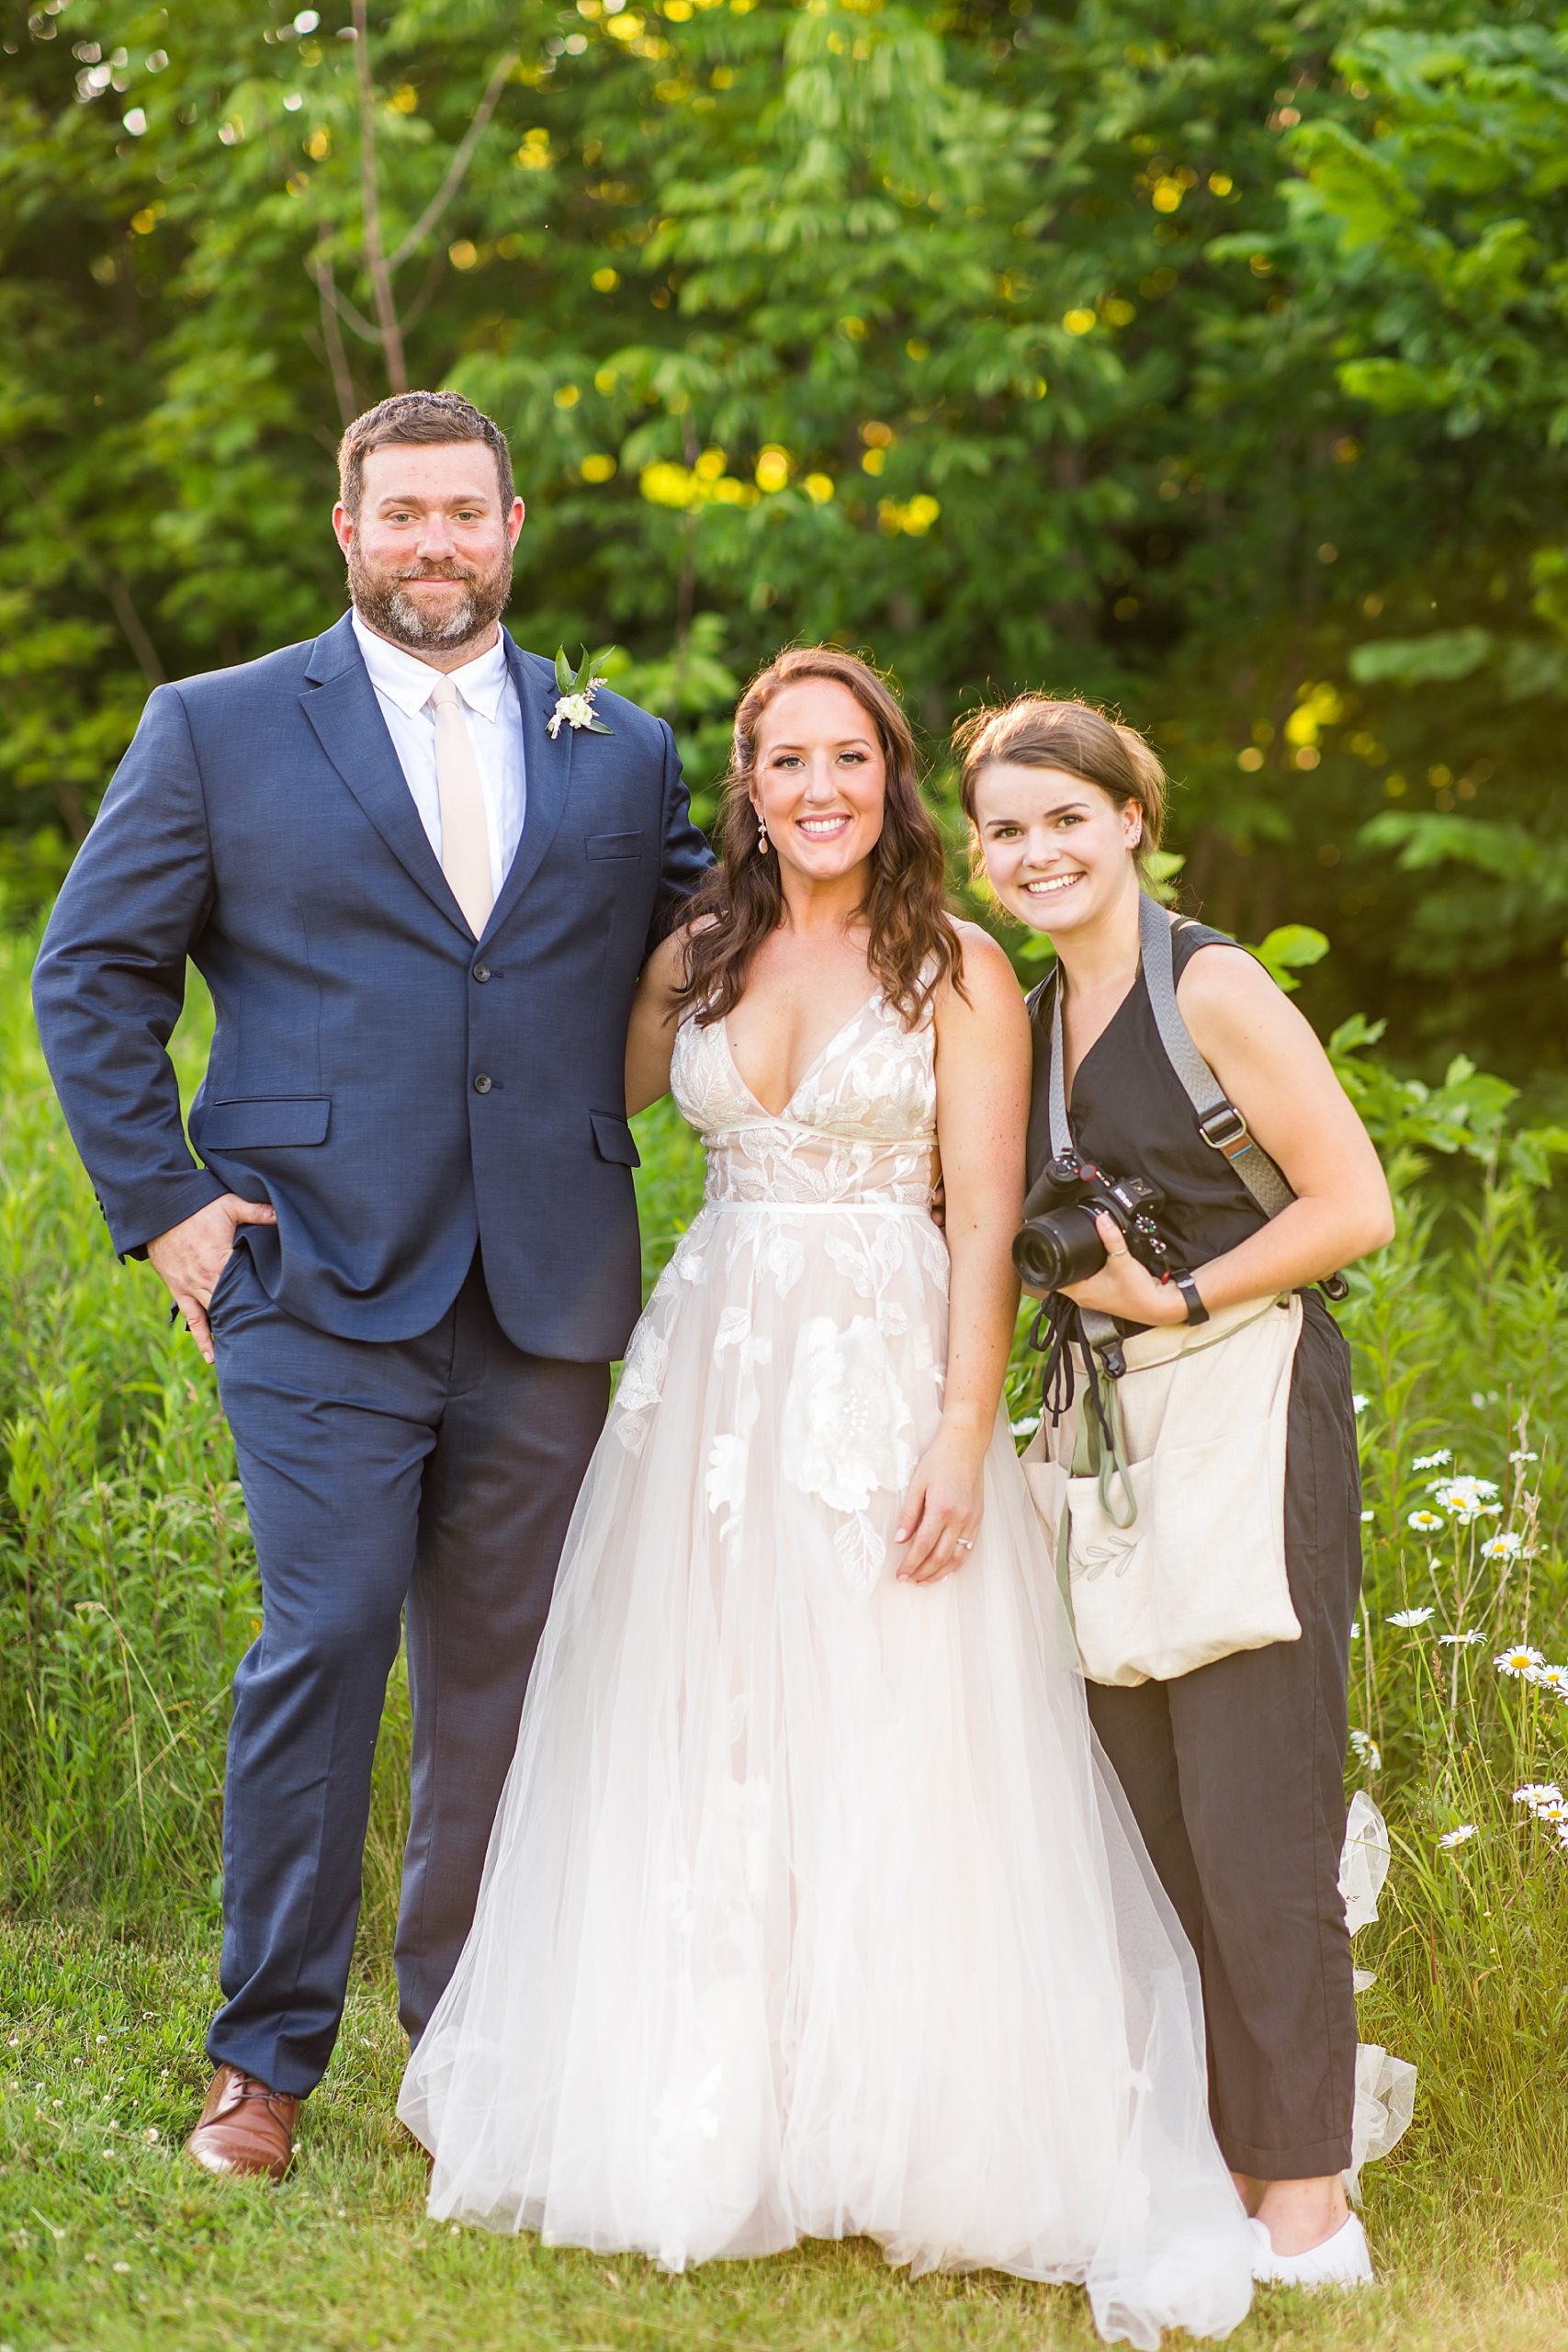 Southern NH wedding photographer Allison clarke with couple on wedding day 